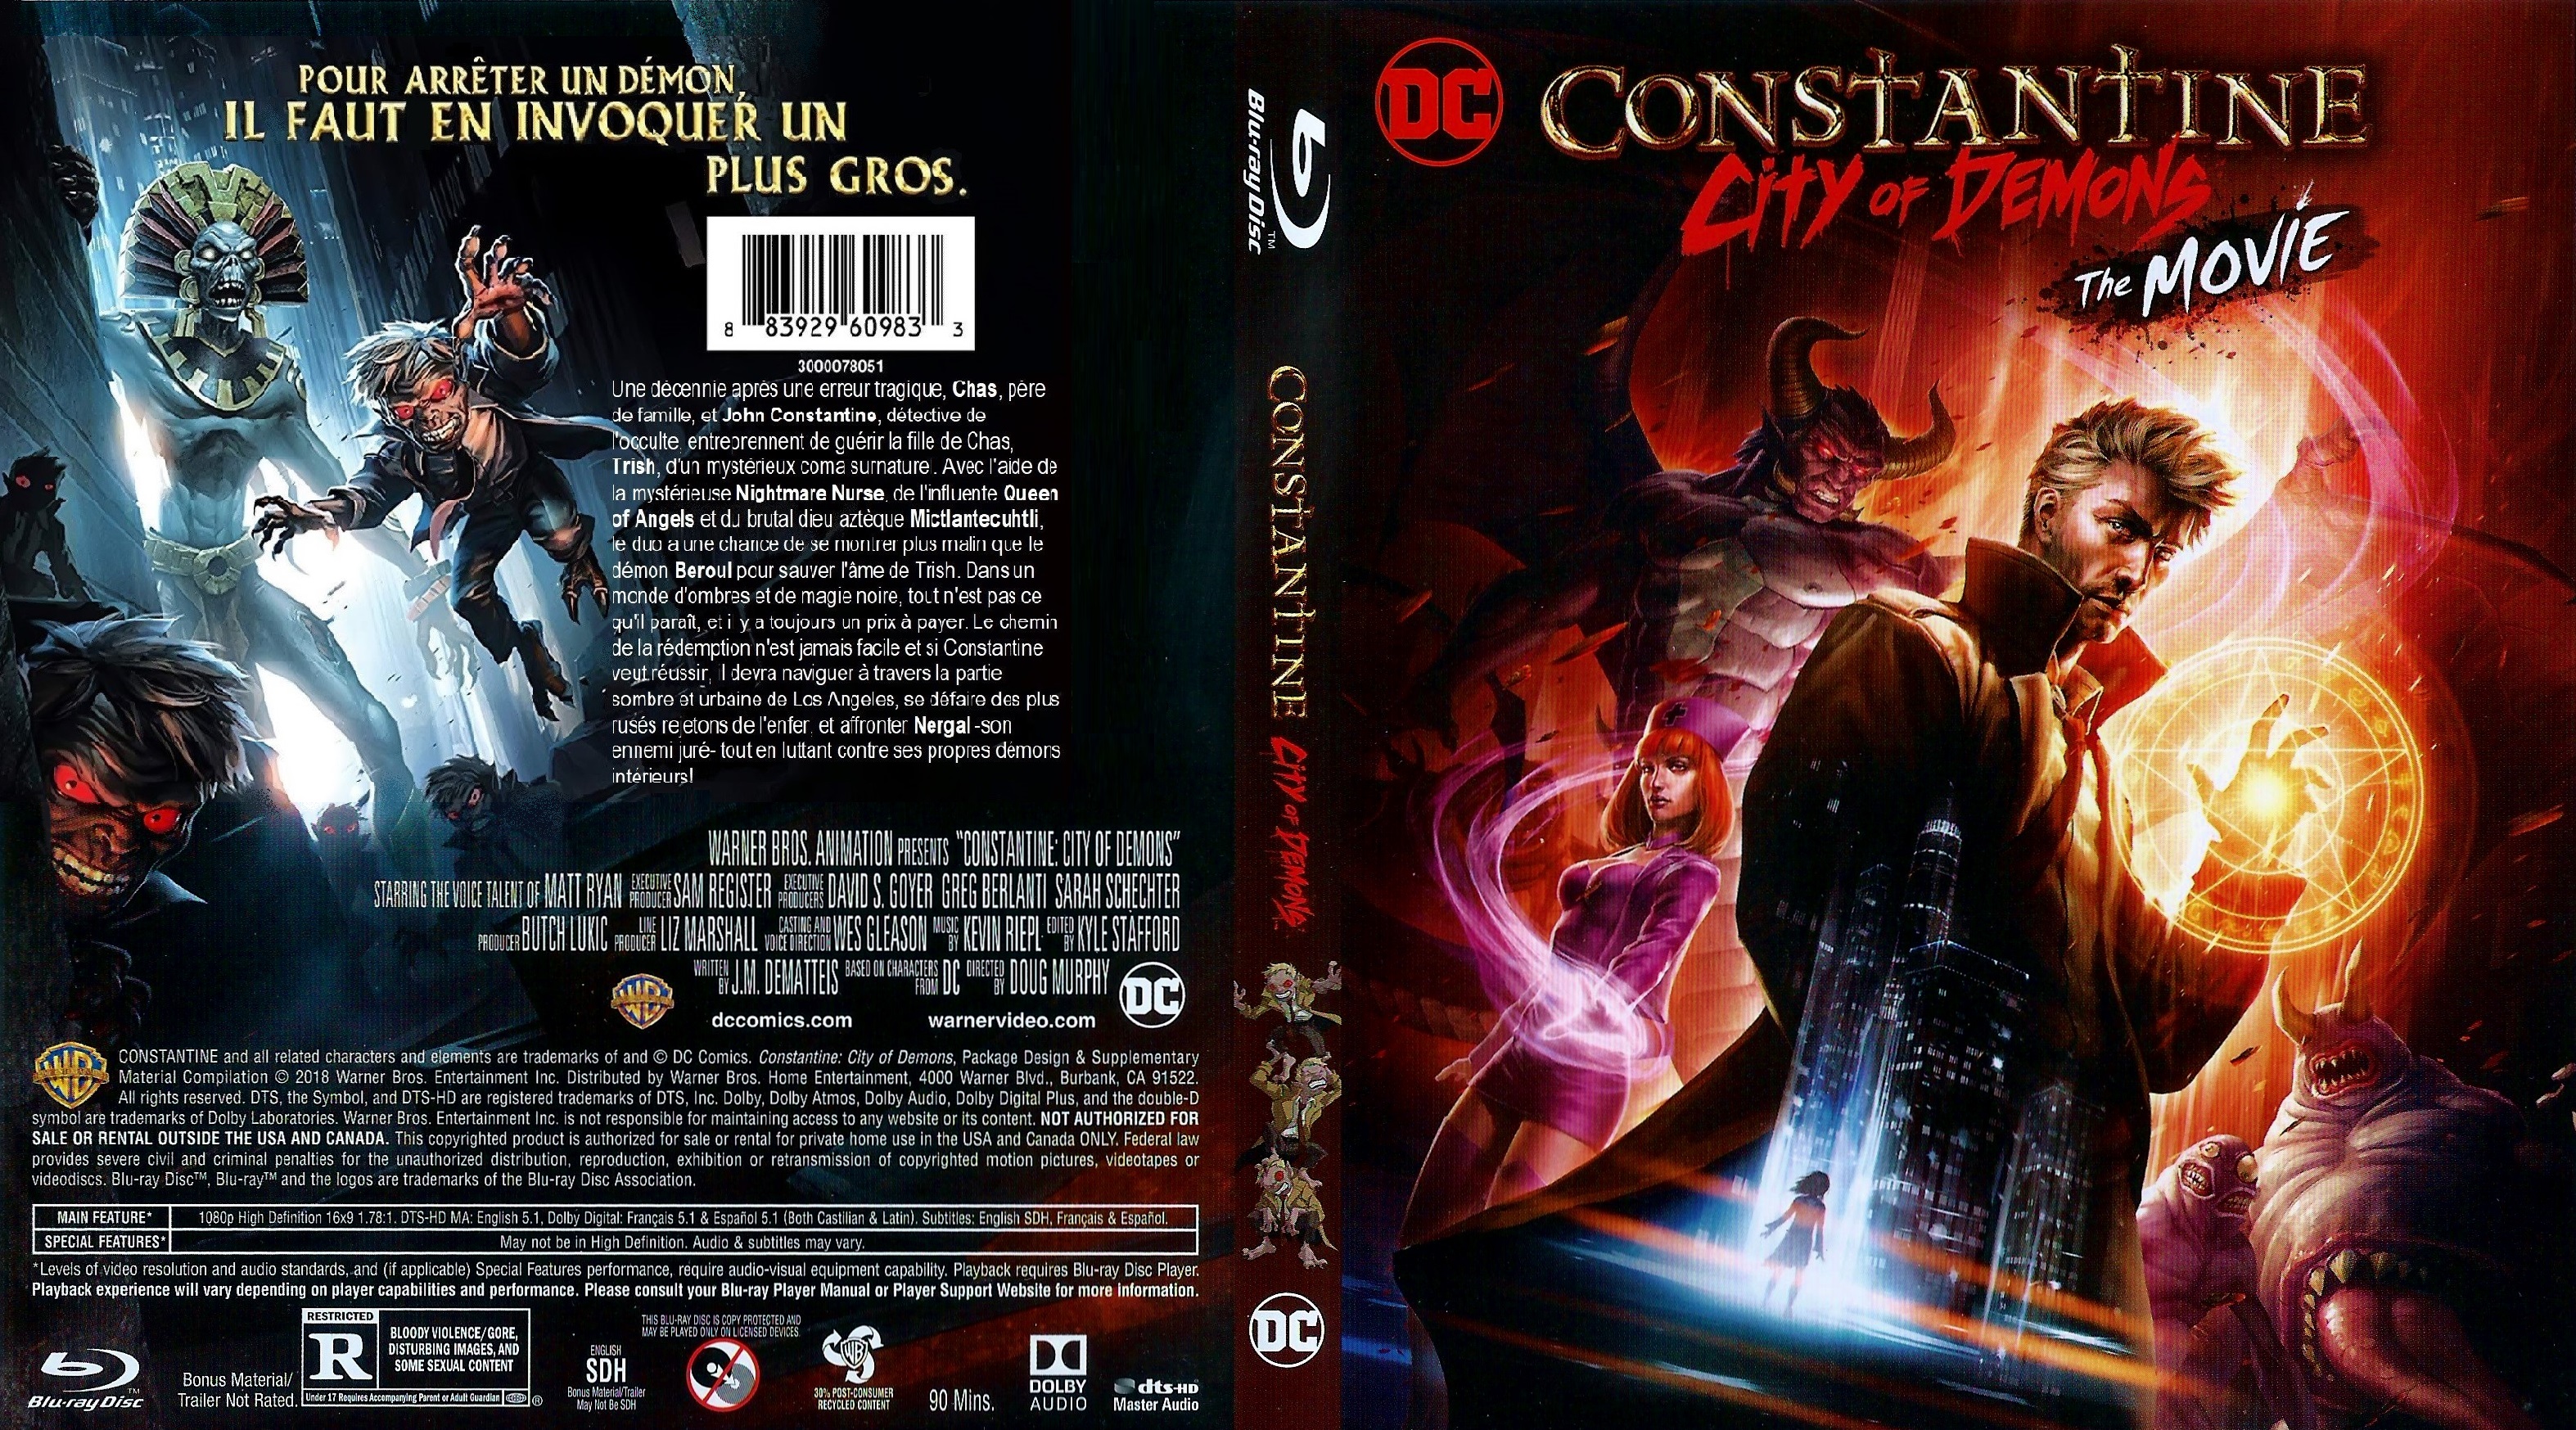 Jaquette DVD Constantine City of Demons Blu-ray custom v2